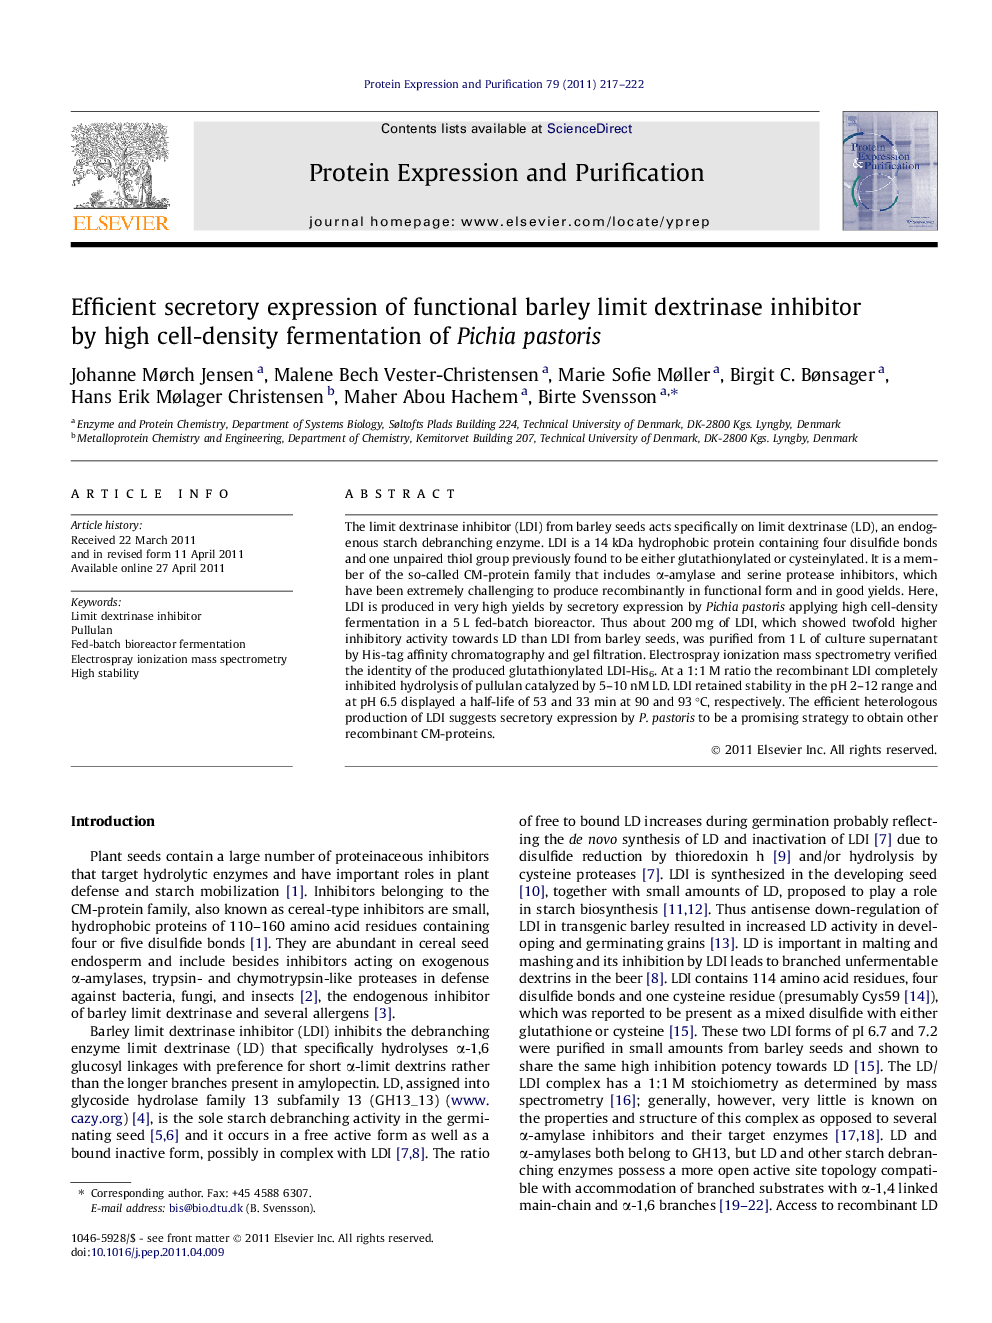 Efficient secretory expression of functional barley limit dextrinase inhibitor by high cell-density fermentation of Pichia pastoris